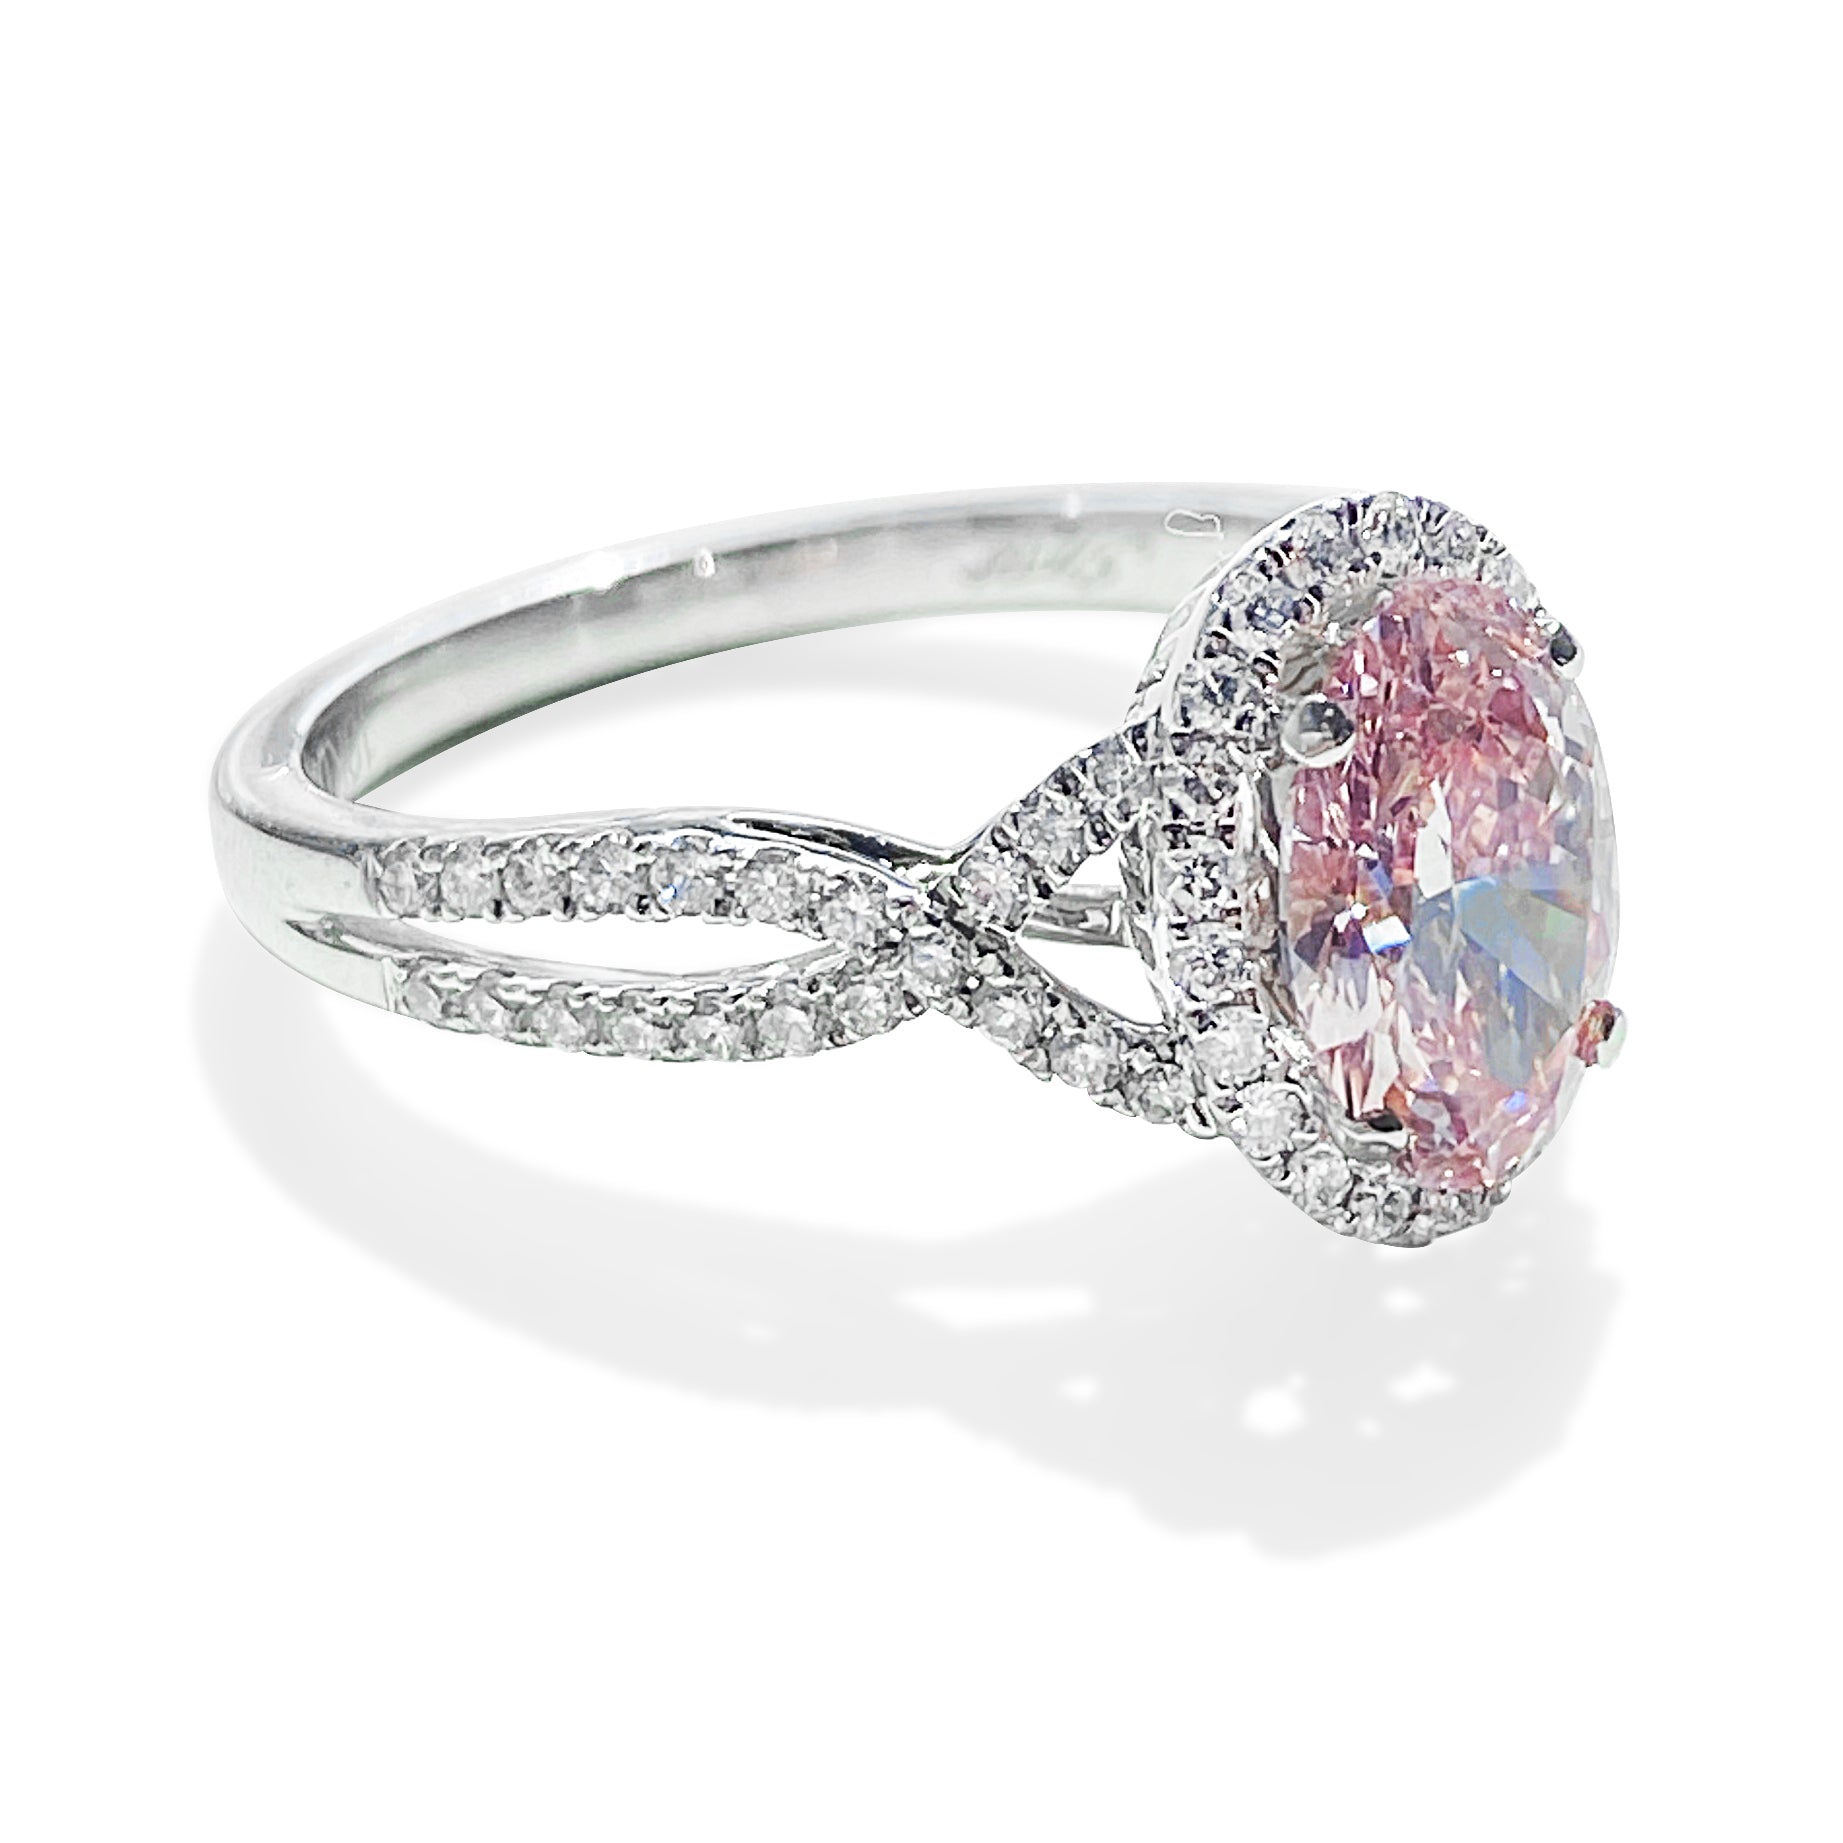 1.07 Carat Fancy Pink Oval Diamond Halo Ring